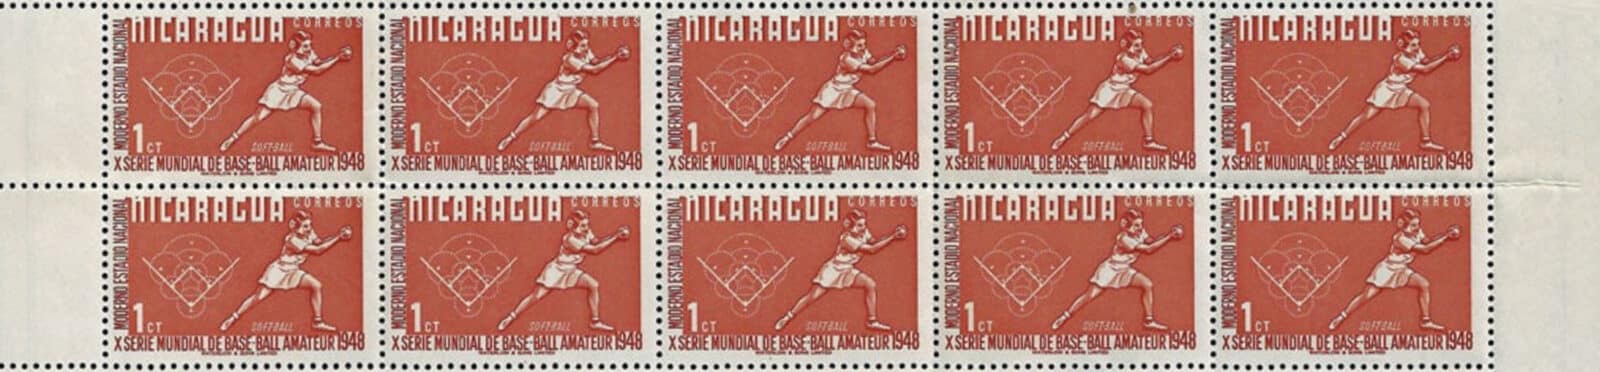 1949 Nicaragua – 10th World Series of Amateur Baseball – header